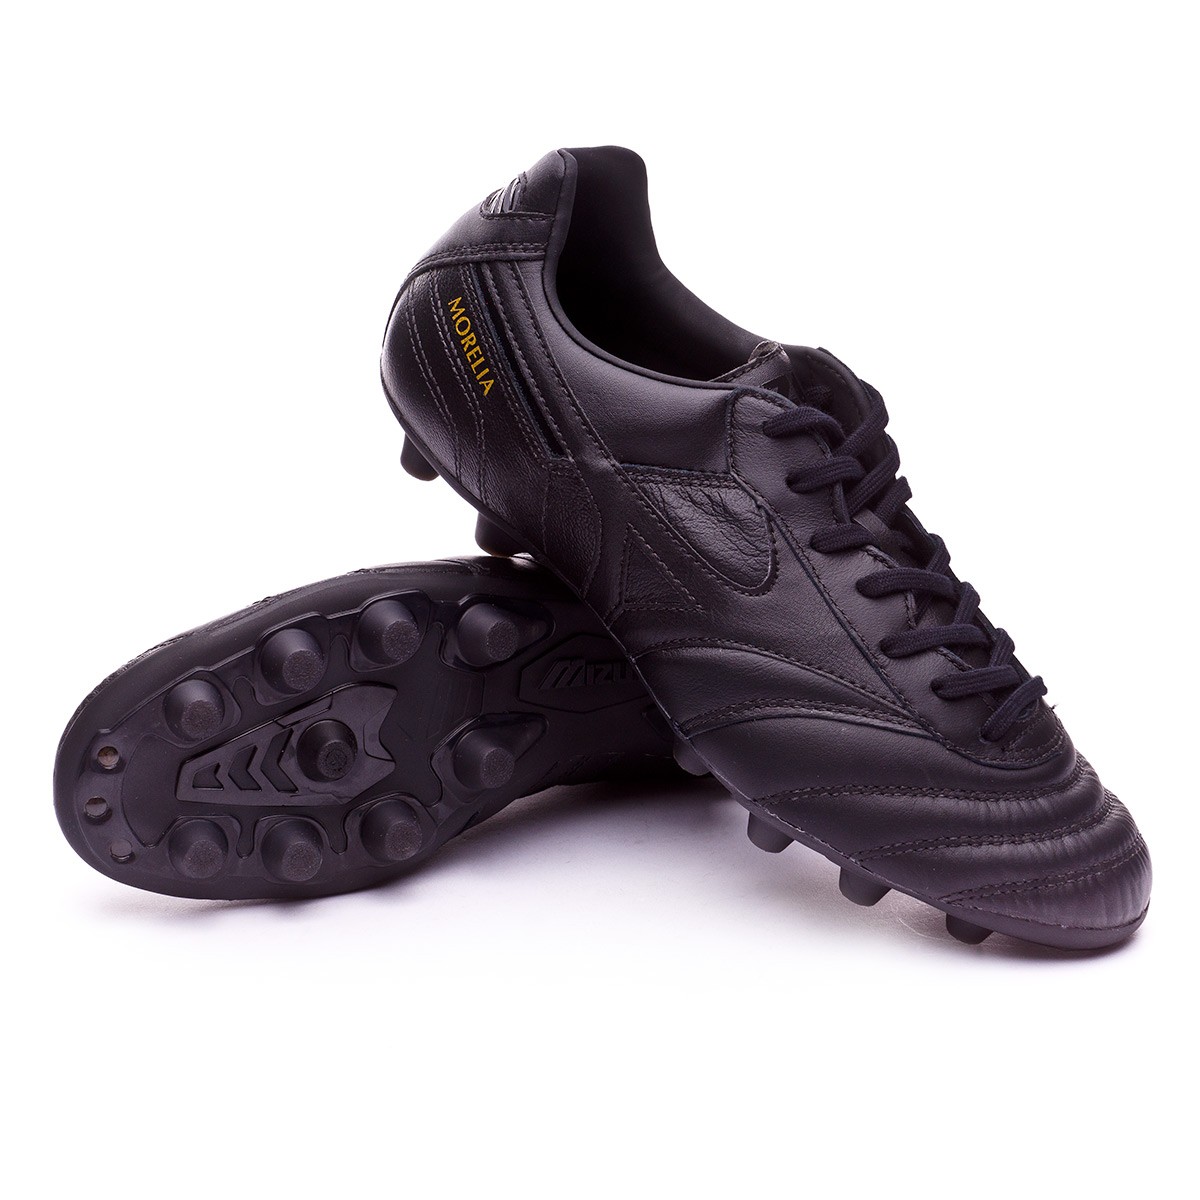 black mizuno football boots